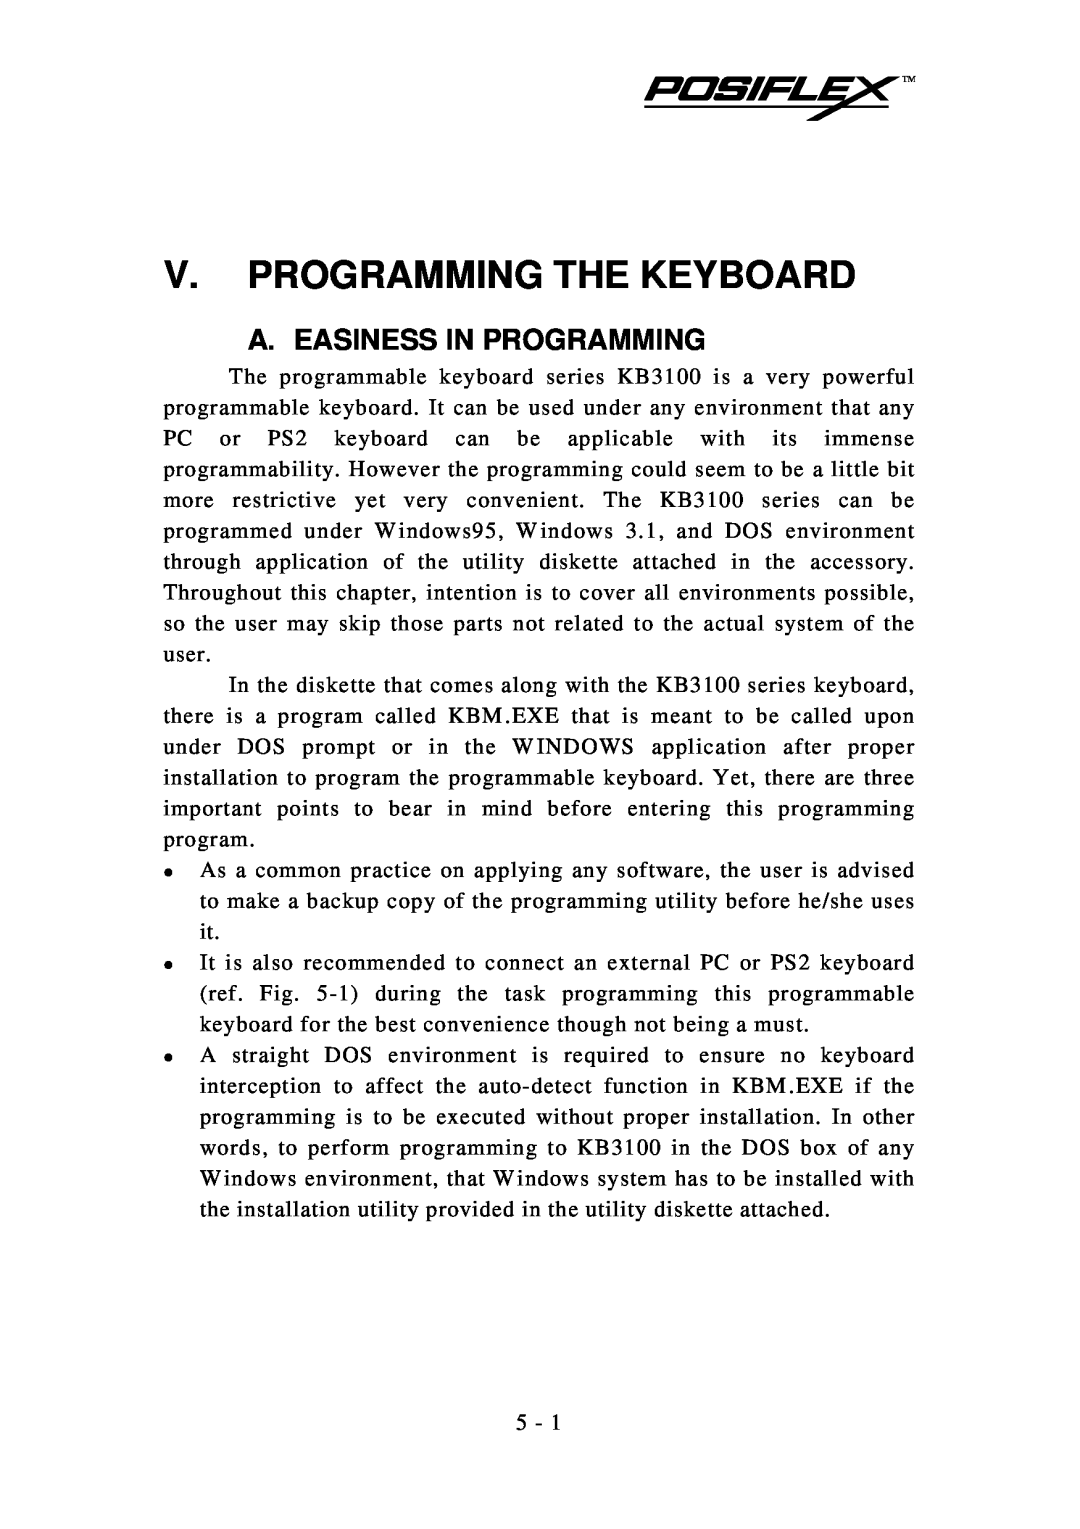 Mustek KB3100 user manual V. Programming The Keyboard, A. Easiness In Programming 